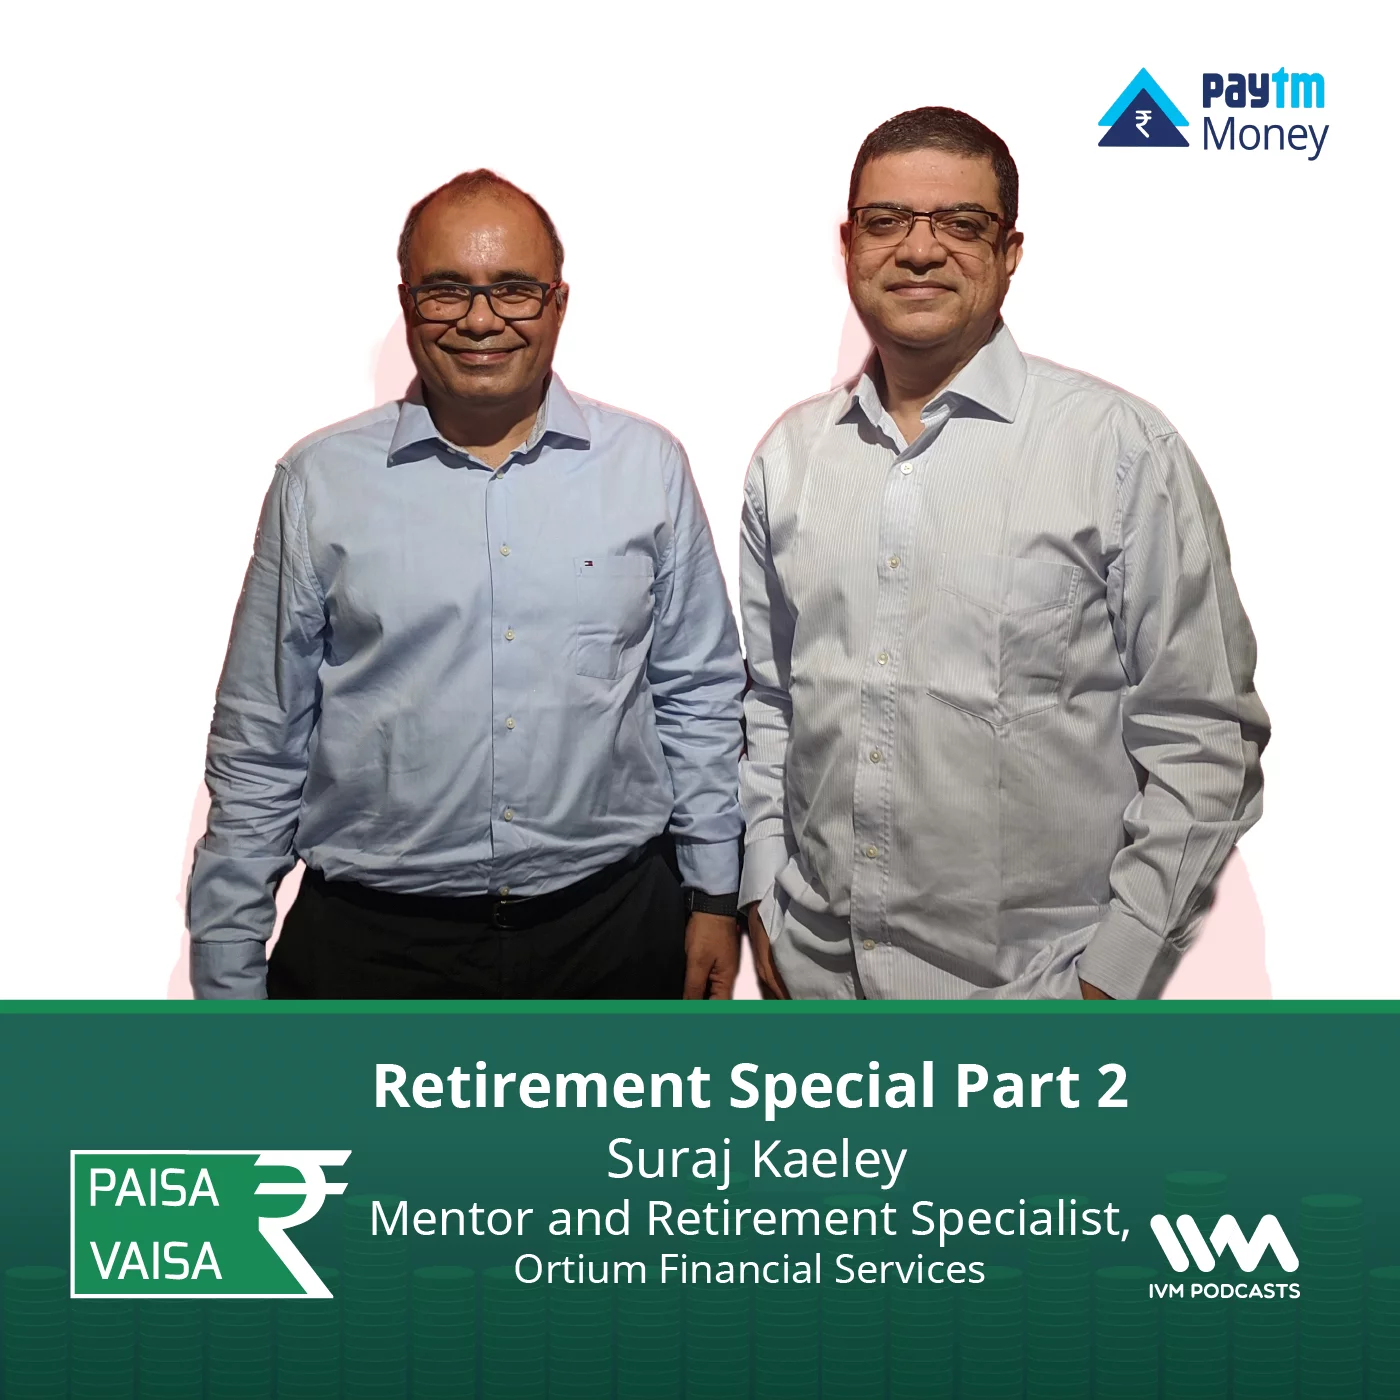 Ep. 228: Retirement Special Part 2